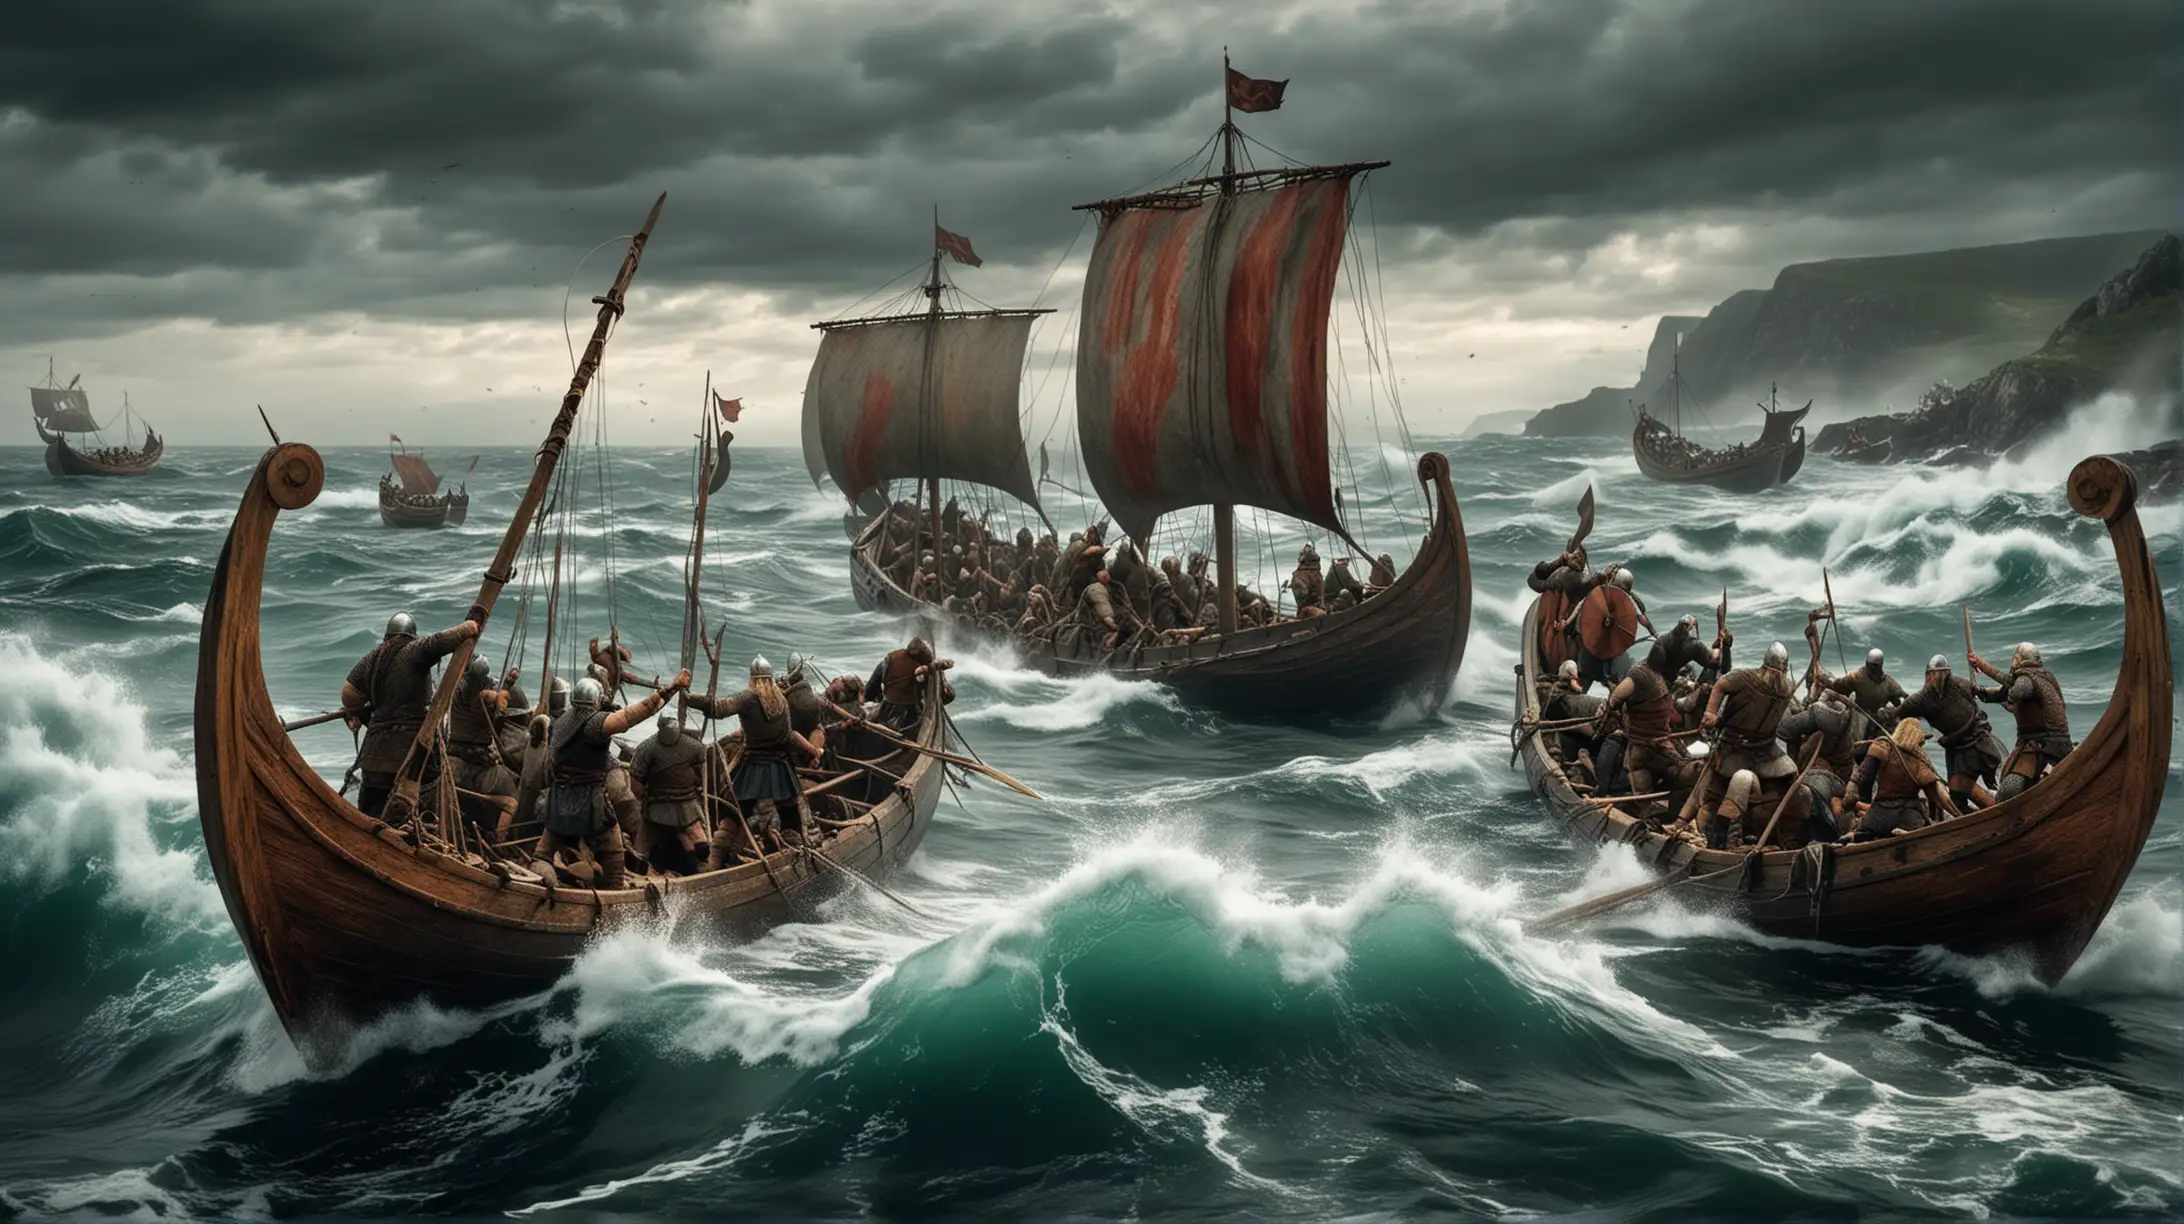 Epic Viking Battle on the High Seas